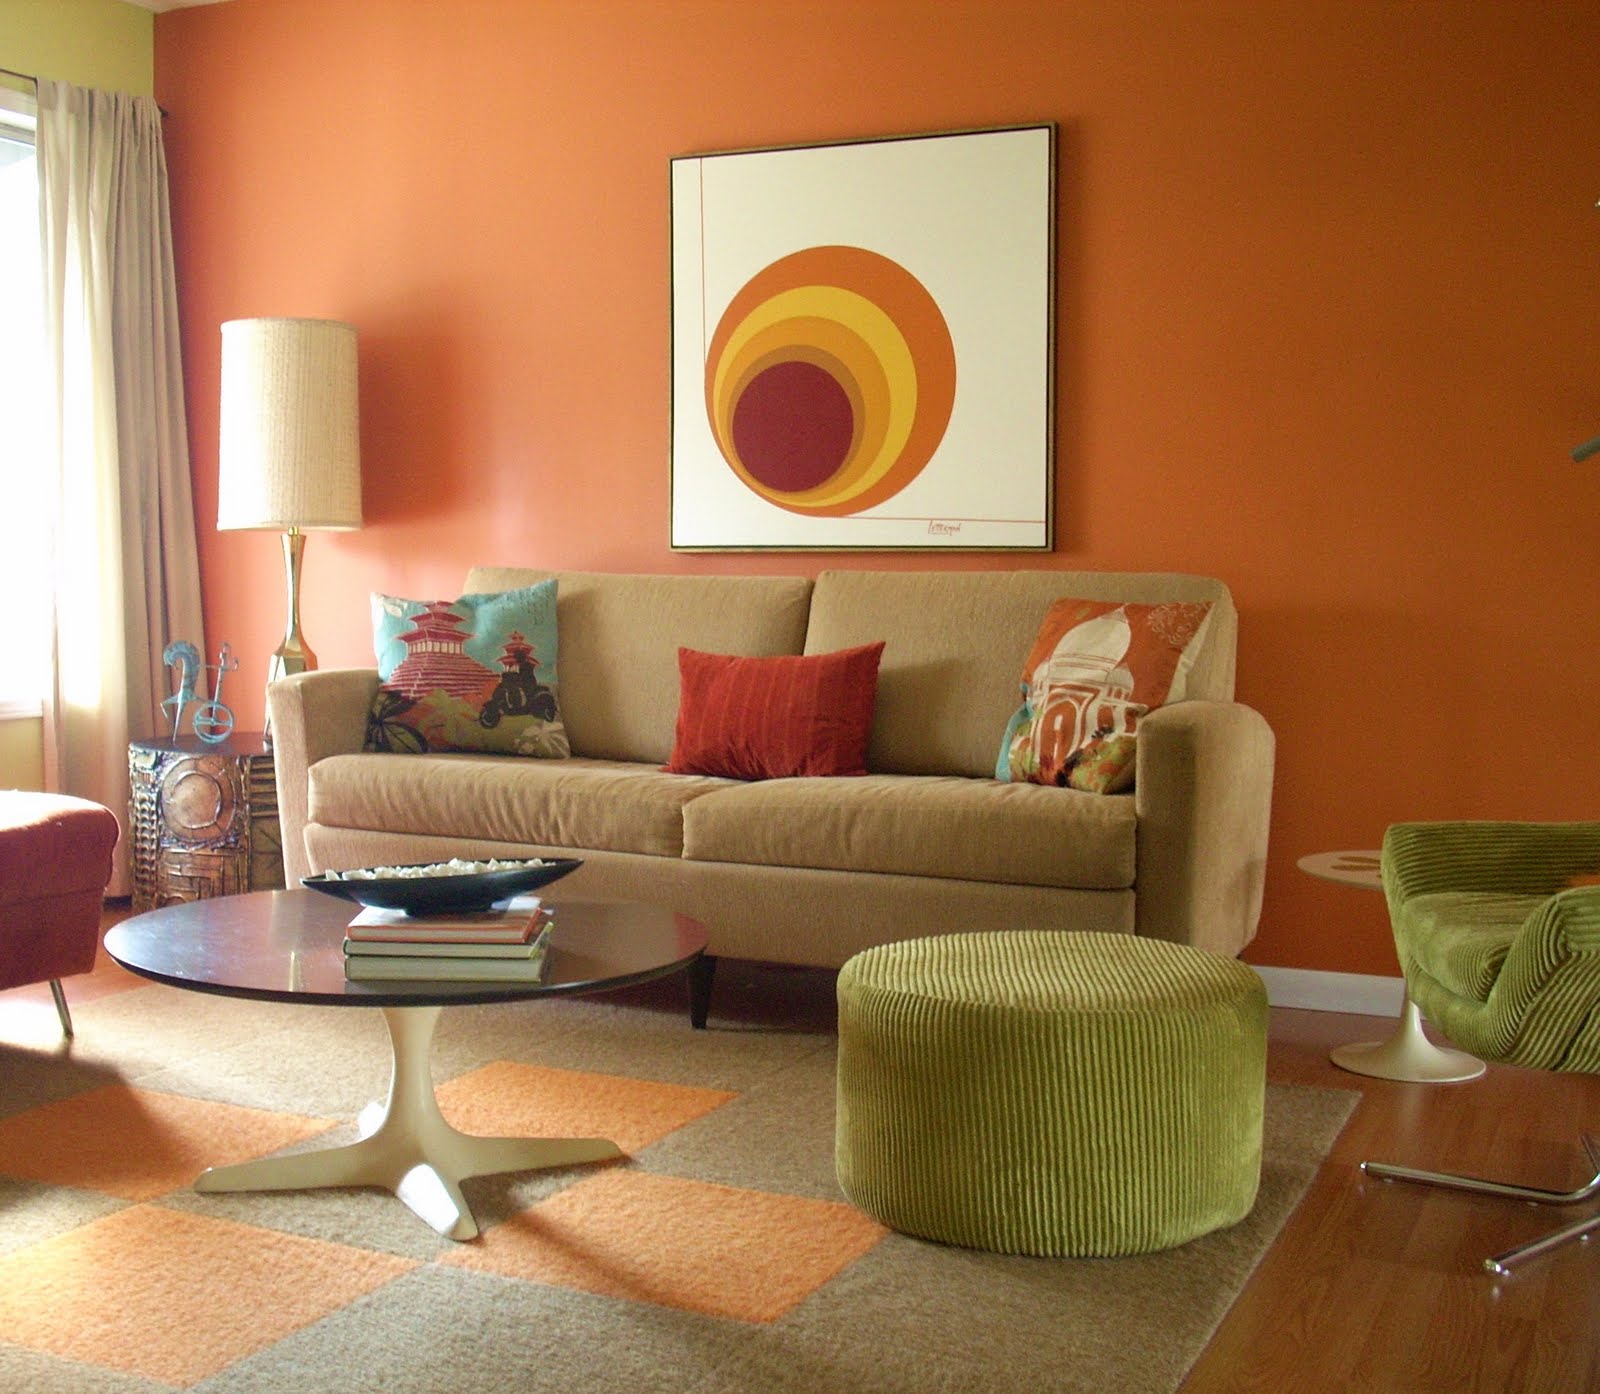 living-room-unique-livingroom-interior-furniture-house-design-ideas-cool-orange-minimalist-living-room-brands-decor-ideas-livingroom-with-bathroom-design-two-seater-brown-fabric-fabulous-inspiration-sofas-and-rou-excelle